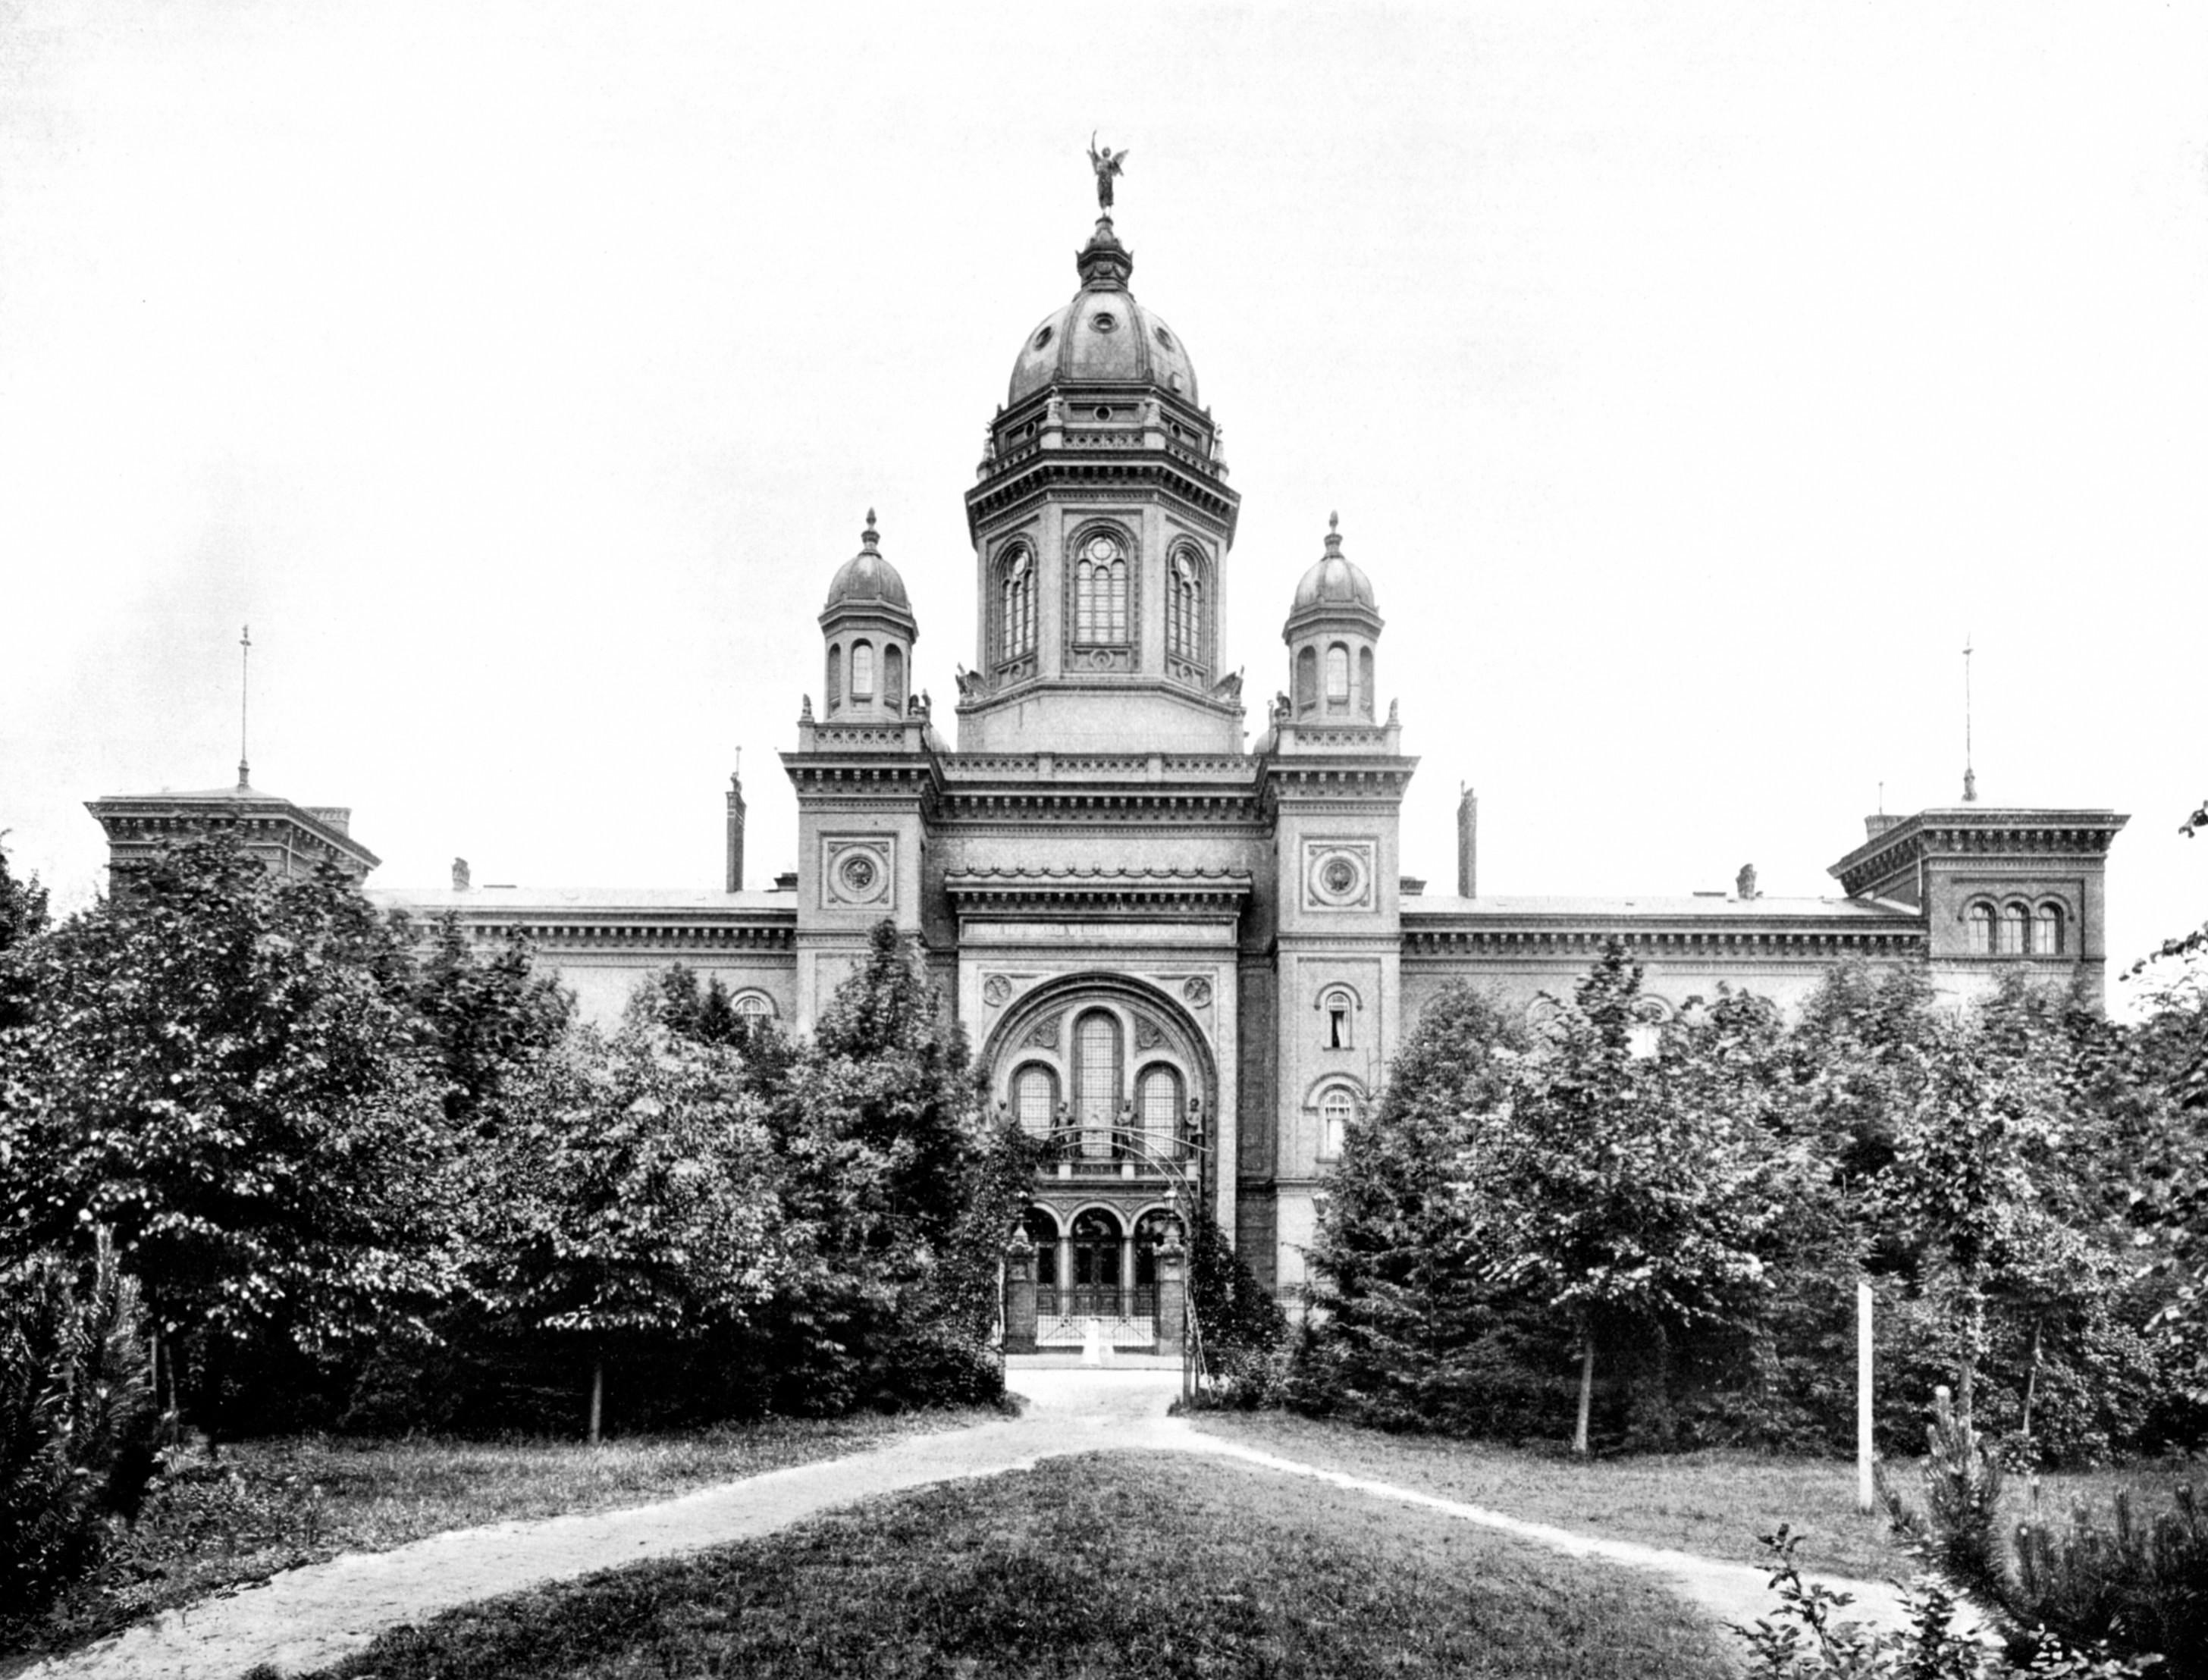 The Royal Preußische (Prussian) Military Academy in Lichterfelde Barracks, Berlin, Germany, circa 1900